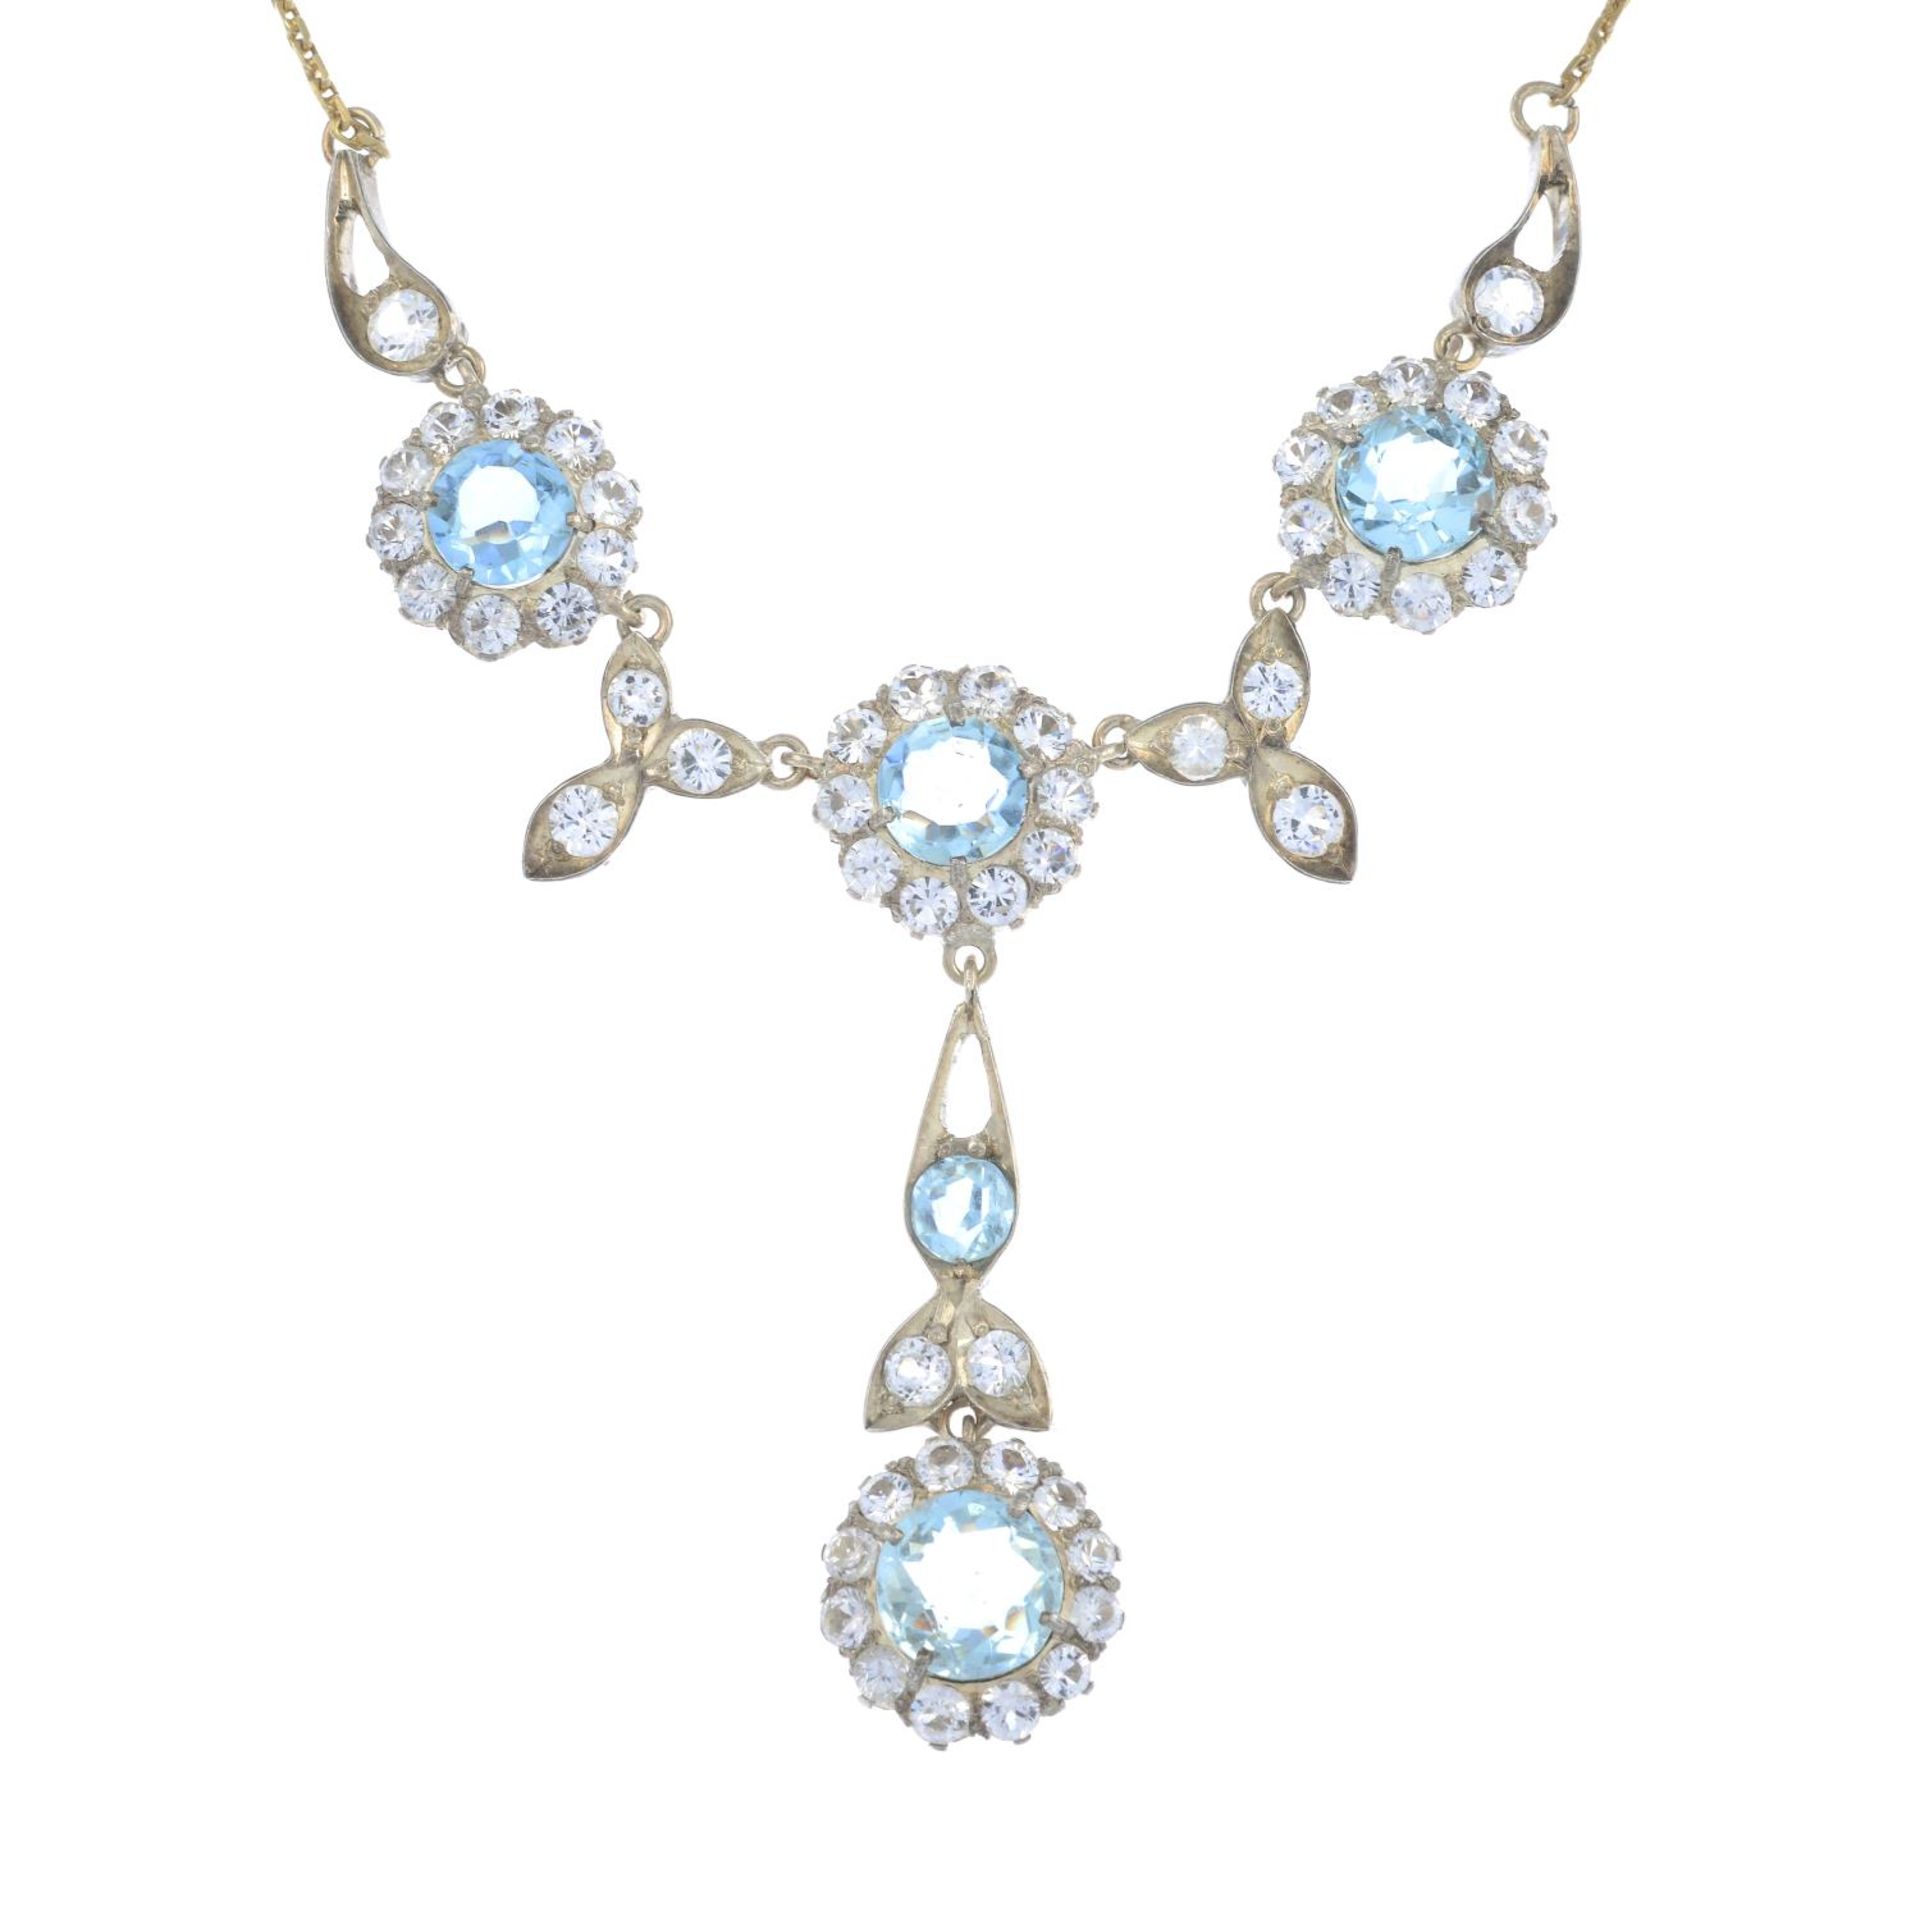 A mid 20th century aquamarine and gem-set necklace.Length 39cms.